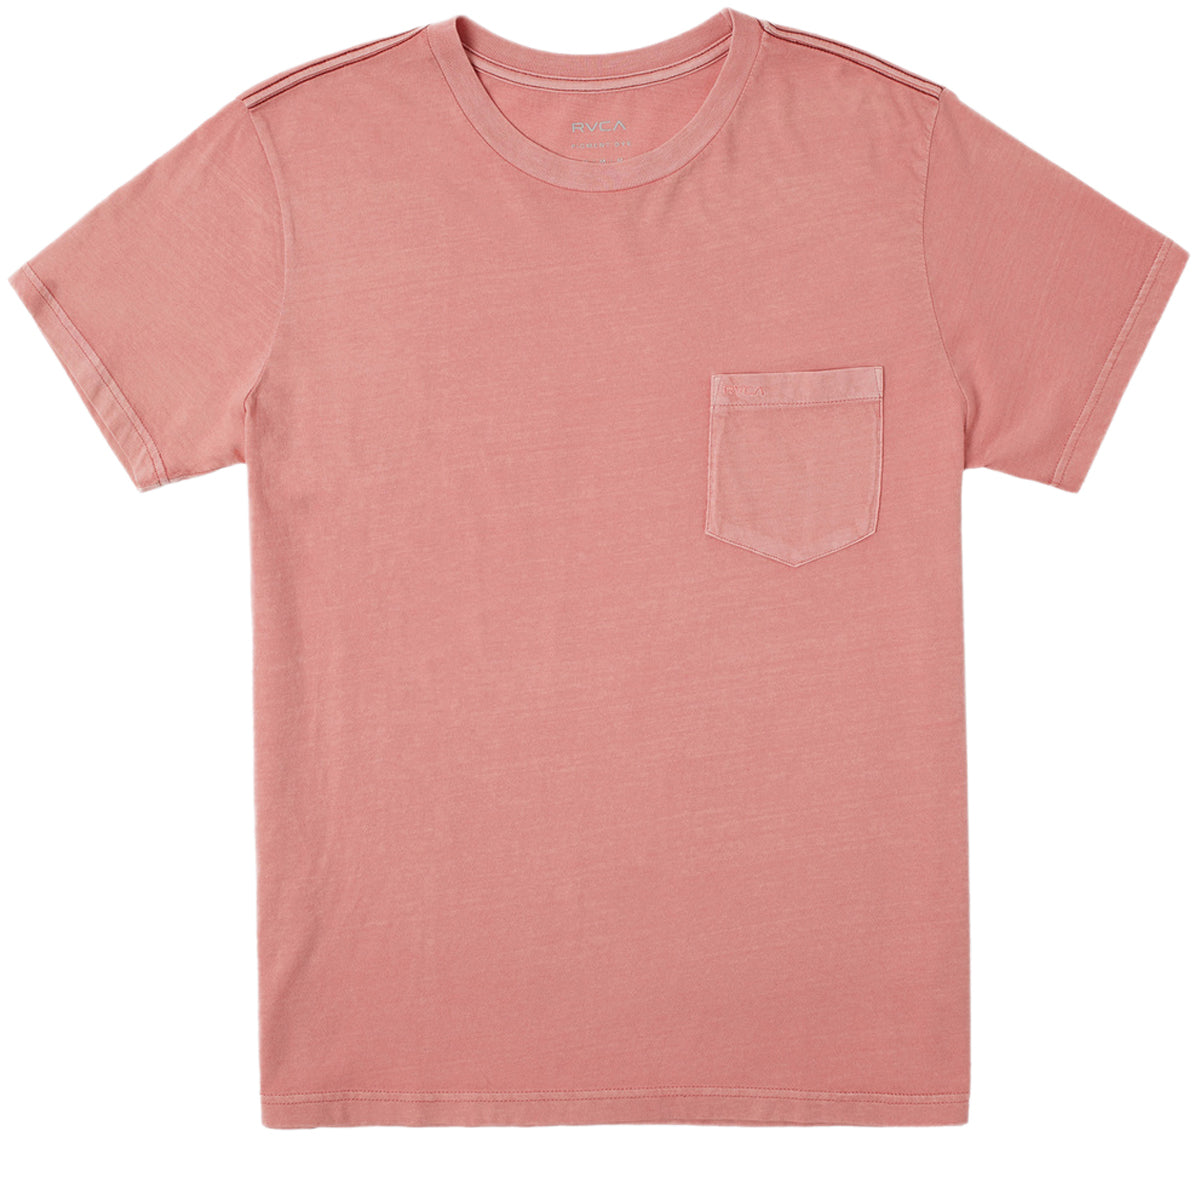 RVCA Ptc 2 Pigment T-Shirt - Flamingo image 1